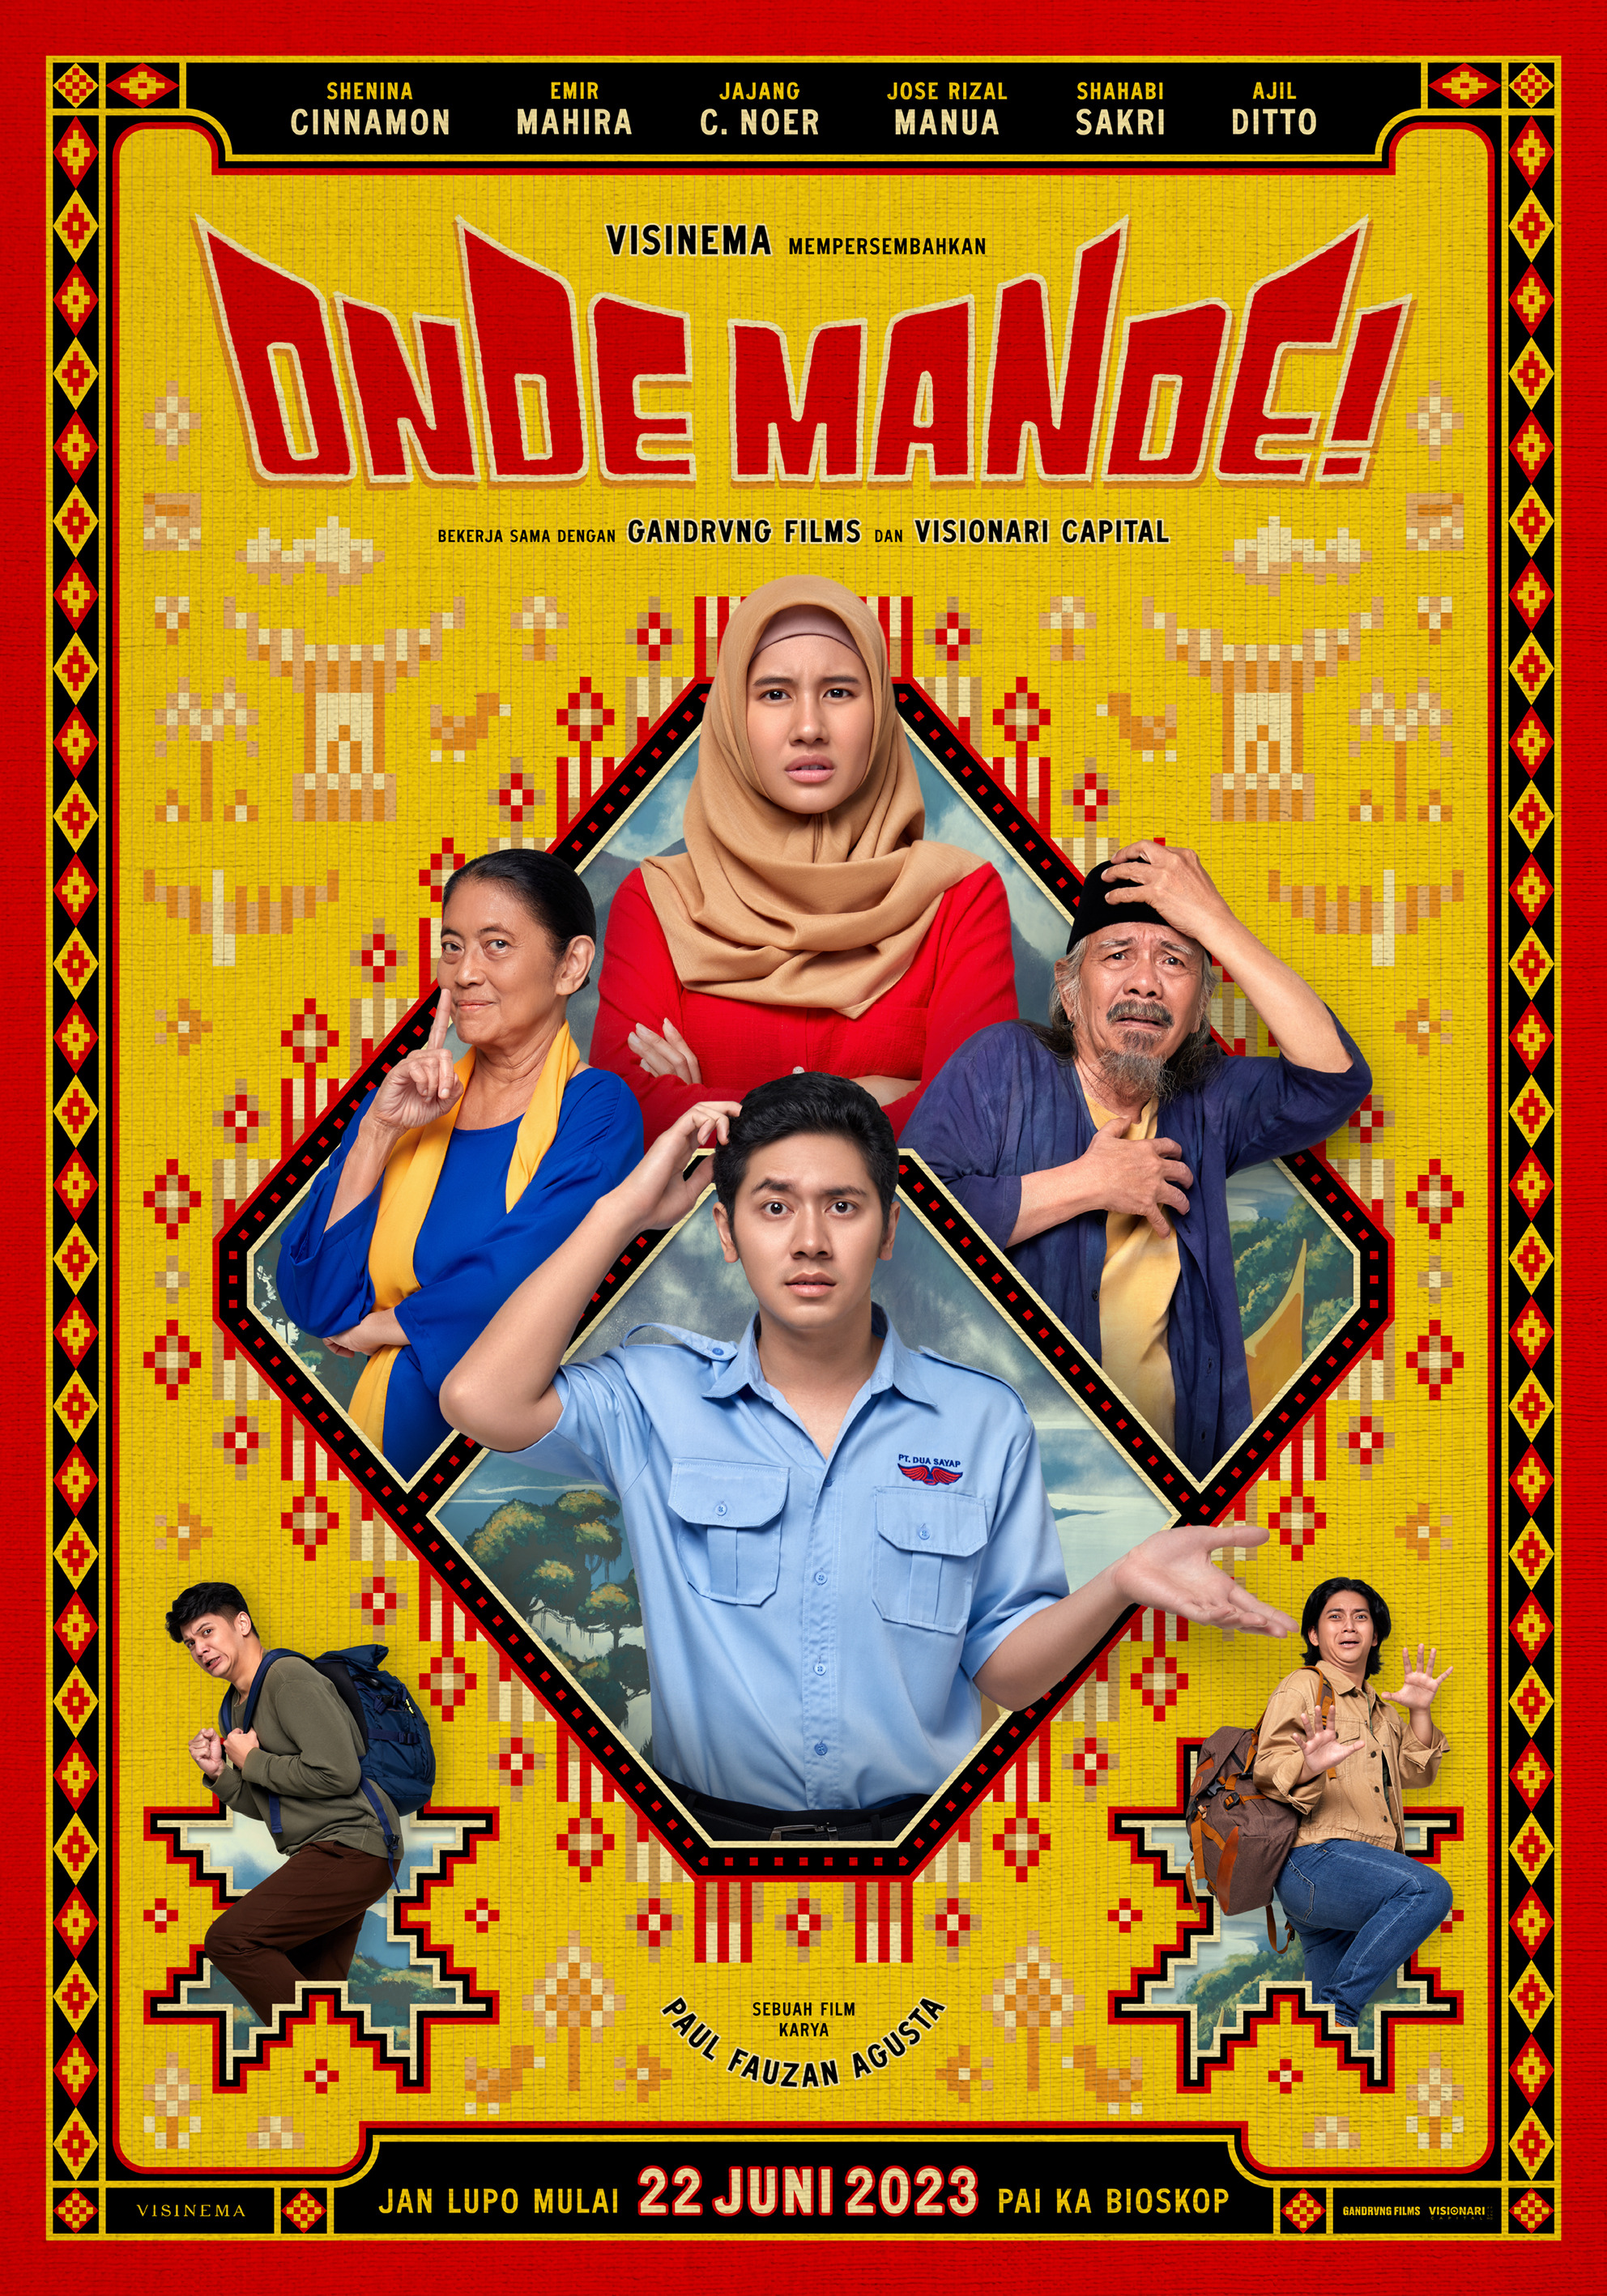 Mega Sized Movie Poster Image for Onde Mande! (#2 of 8)